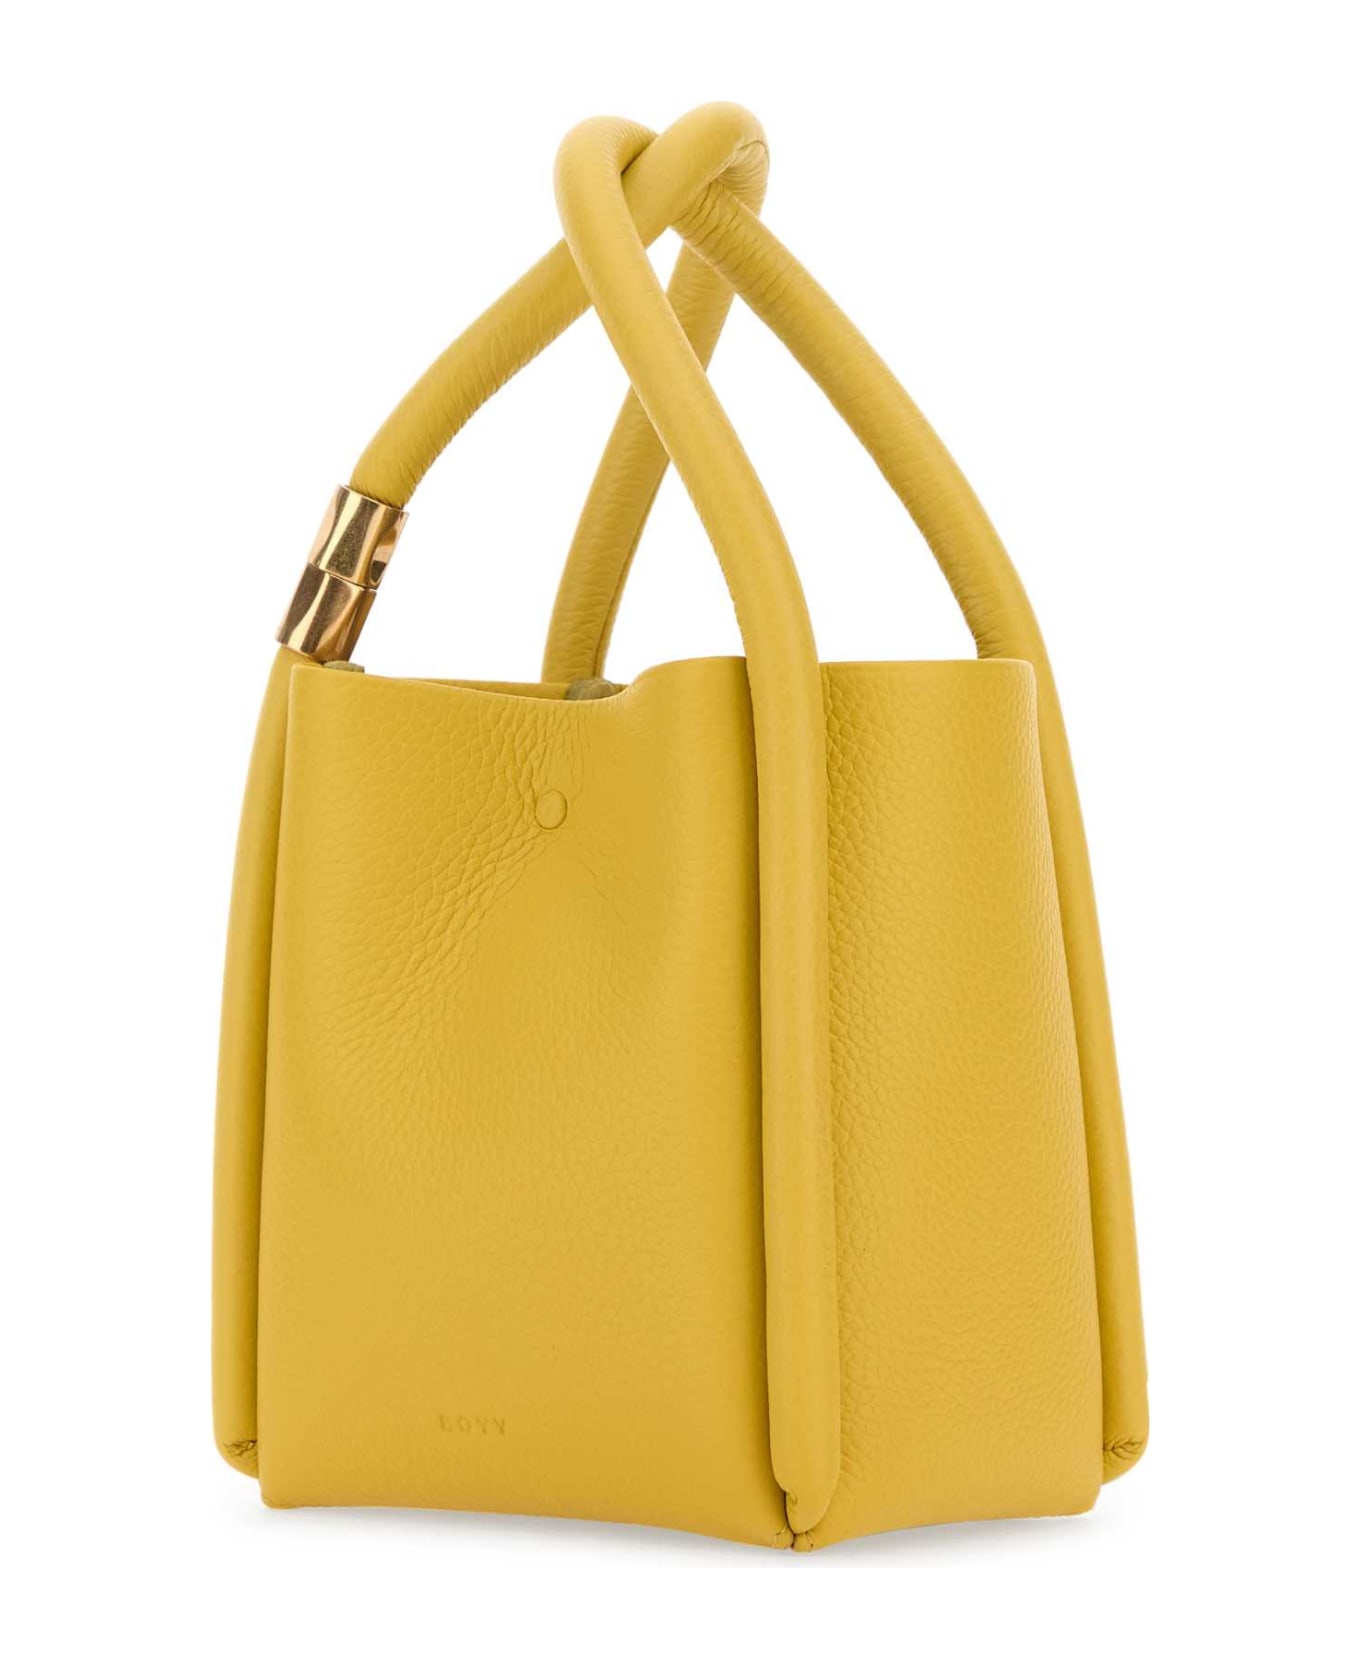 BOYY Mustard Leather Lotus 12 Handbag - BAMBOO